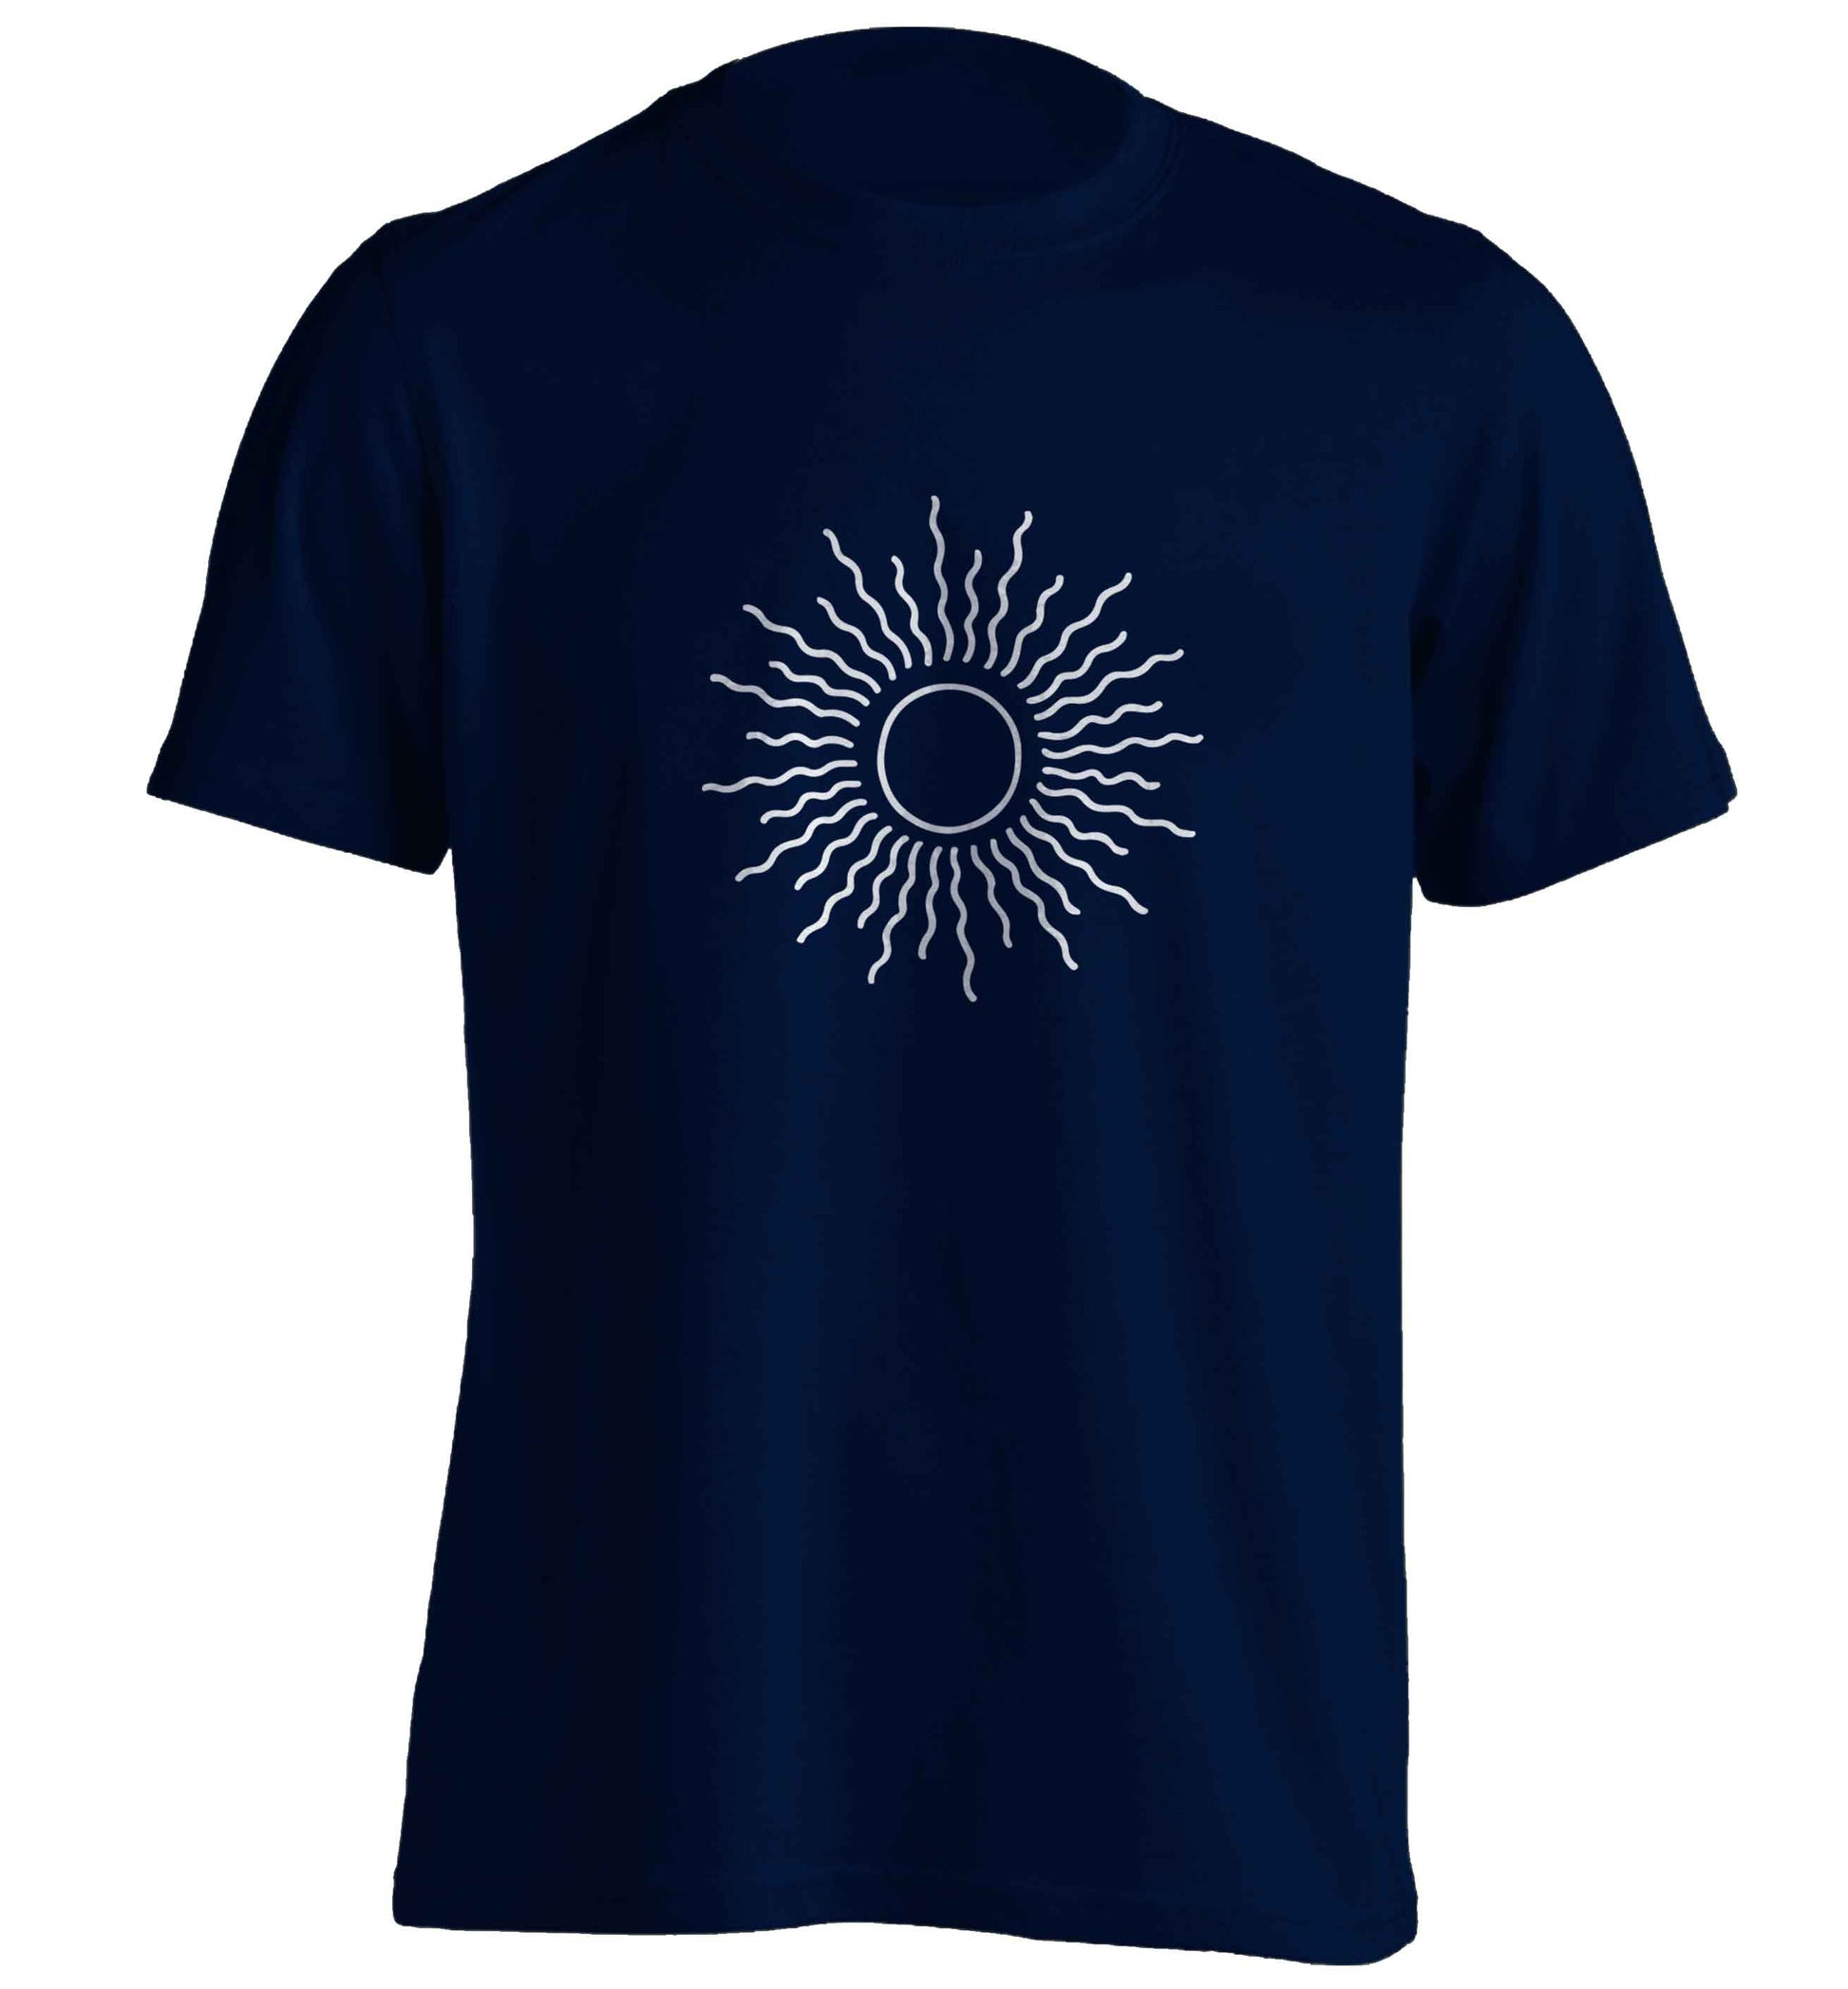 Sun illustration adults unisex navy Tshirt 2XL